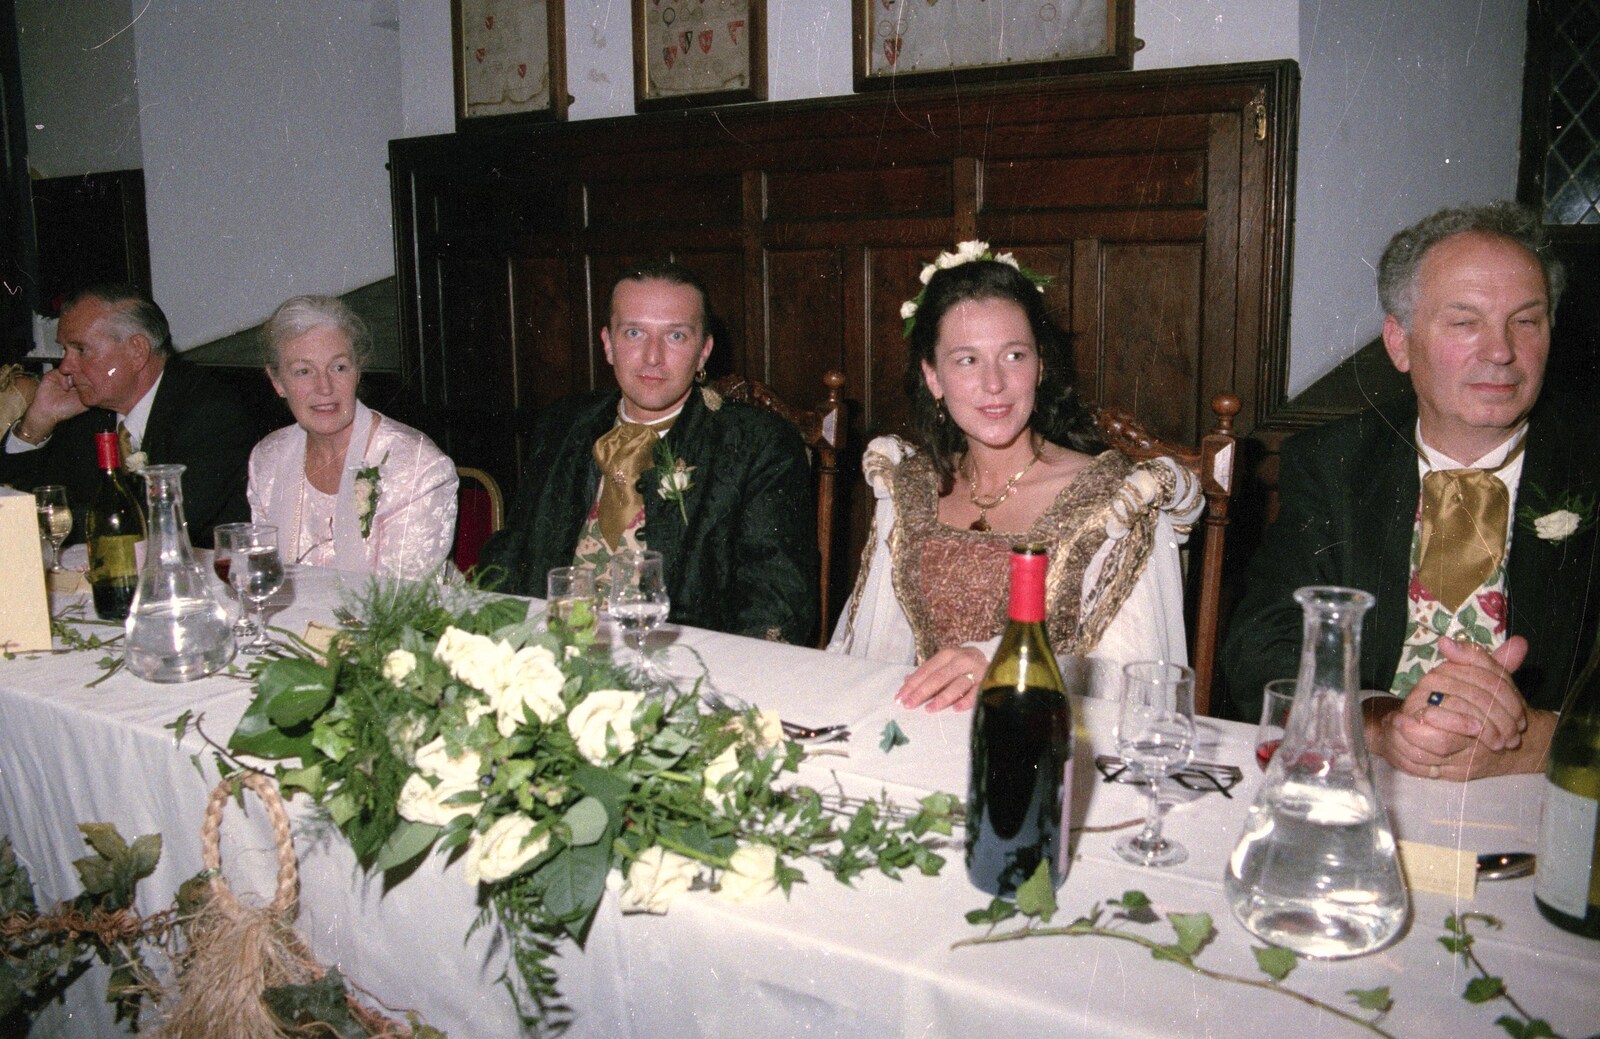 Stuart and the Top Table from Stuart and Sarah's CISU Wedding, Naworth Castle, Brampton, Cumbria - 21st September 1996